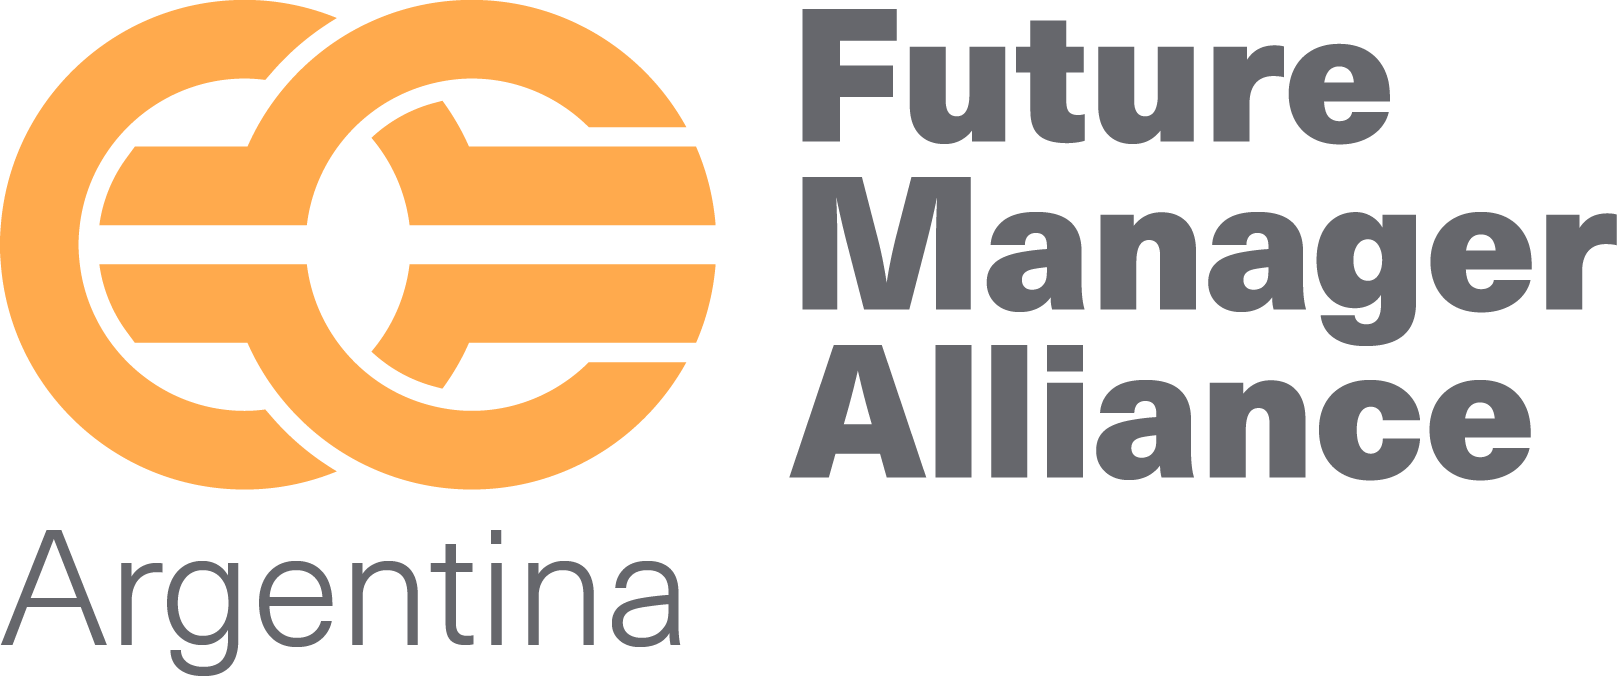 Future Manager Alliance Argentina